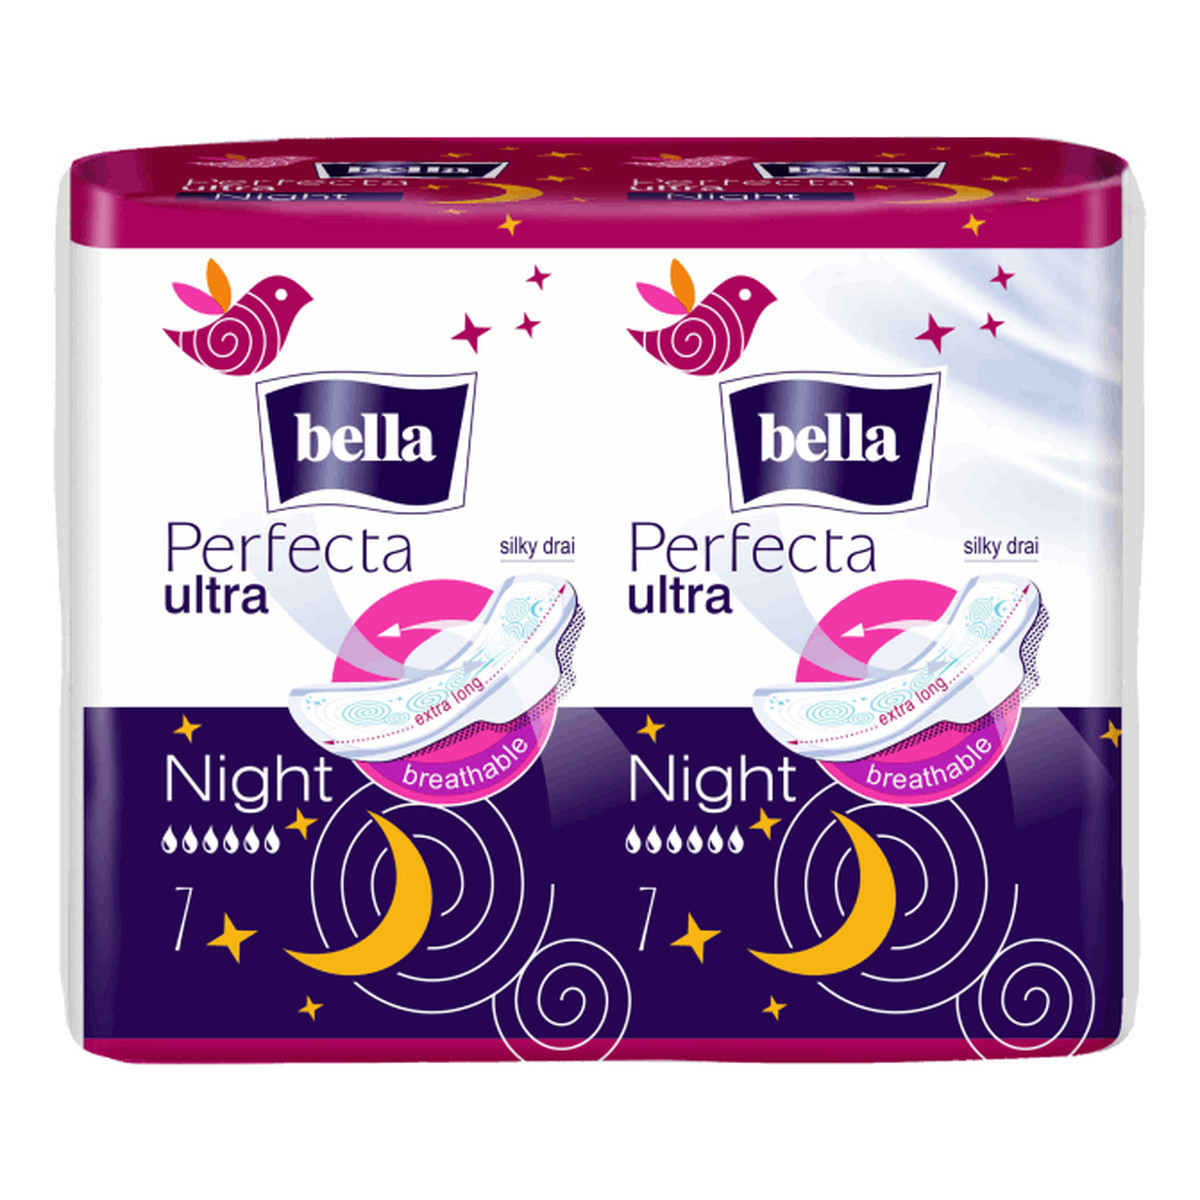 Bella Ultra Night XXL Perfecta Podpaski Higieniczne 7 + 7 Gratis